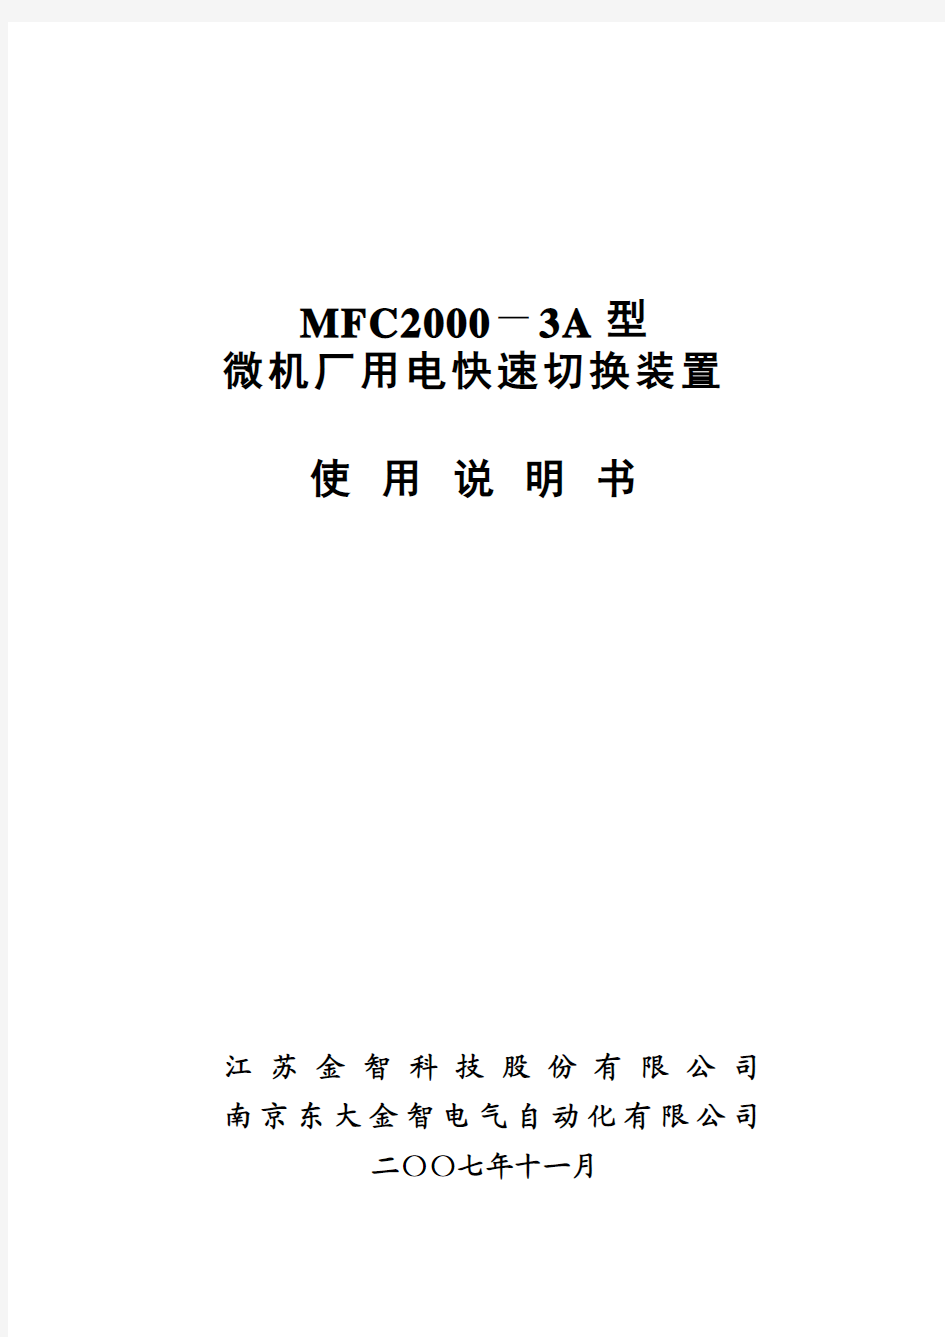 MFC2000-3A-D使用说明书V1.0